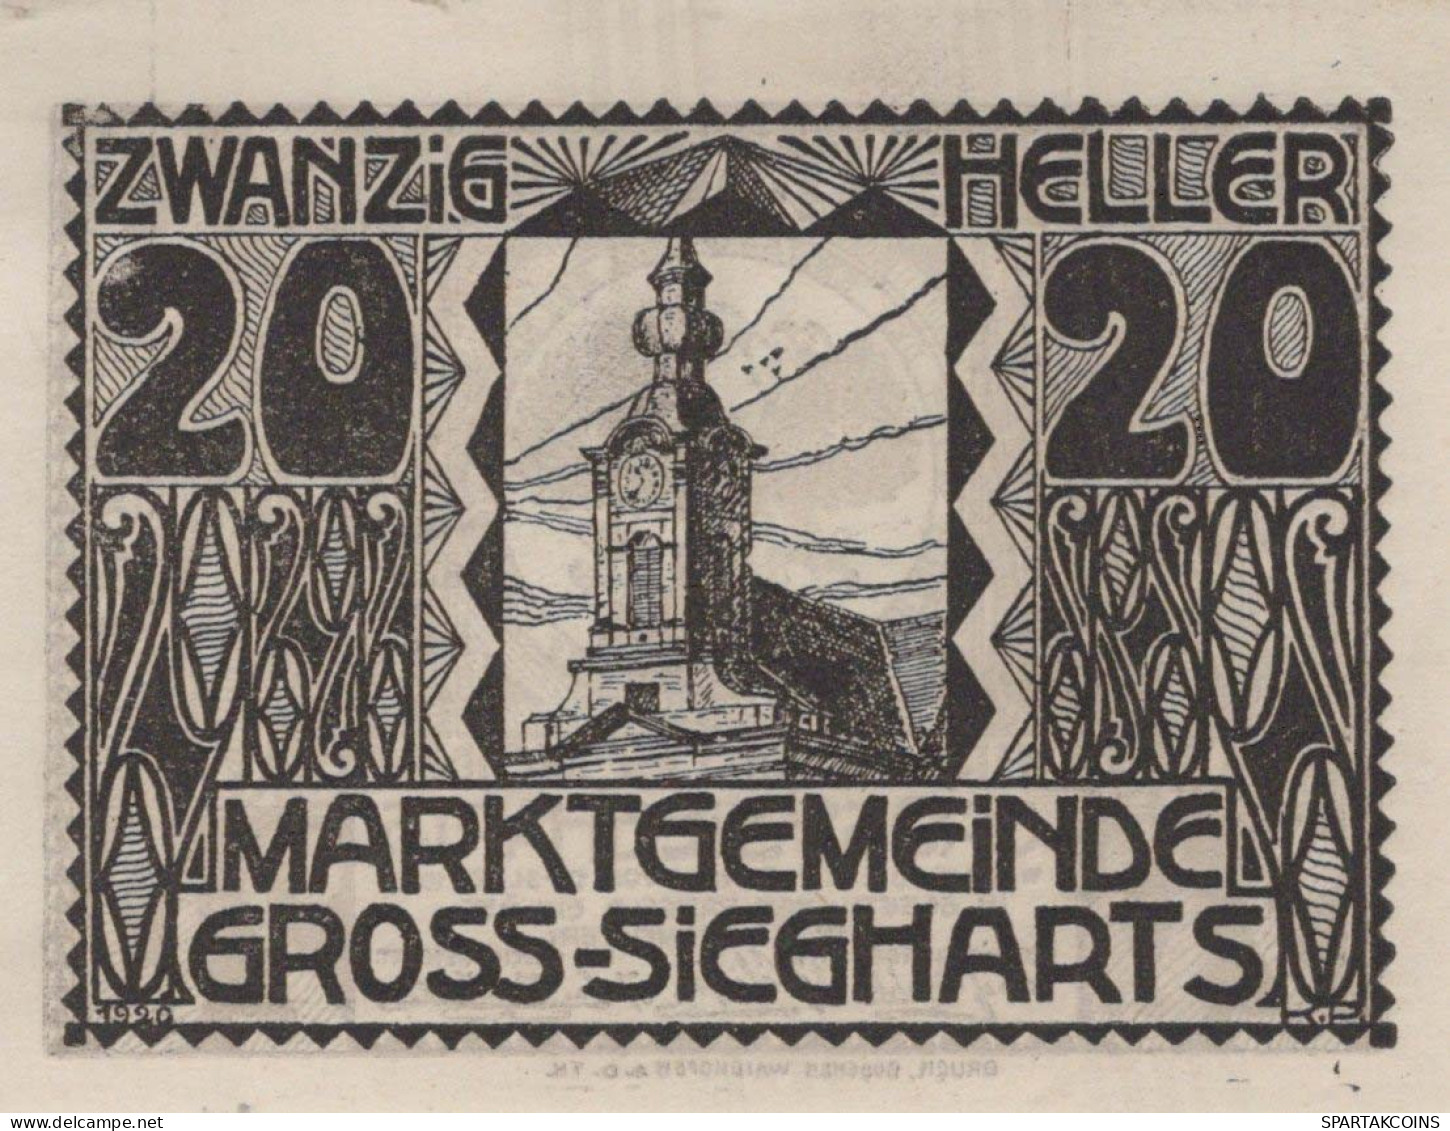 20 HELLER 1920 Stadt GROSS-SIEGHARTS Niedrigeren Österreich Notgeld Papiergeld Banknote #PG837 - [11] Local Banknote Issues